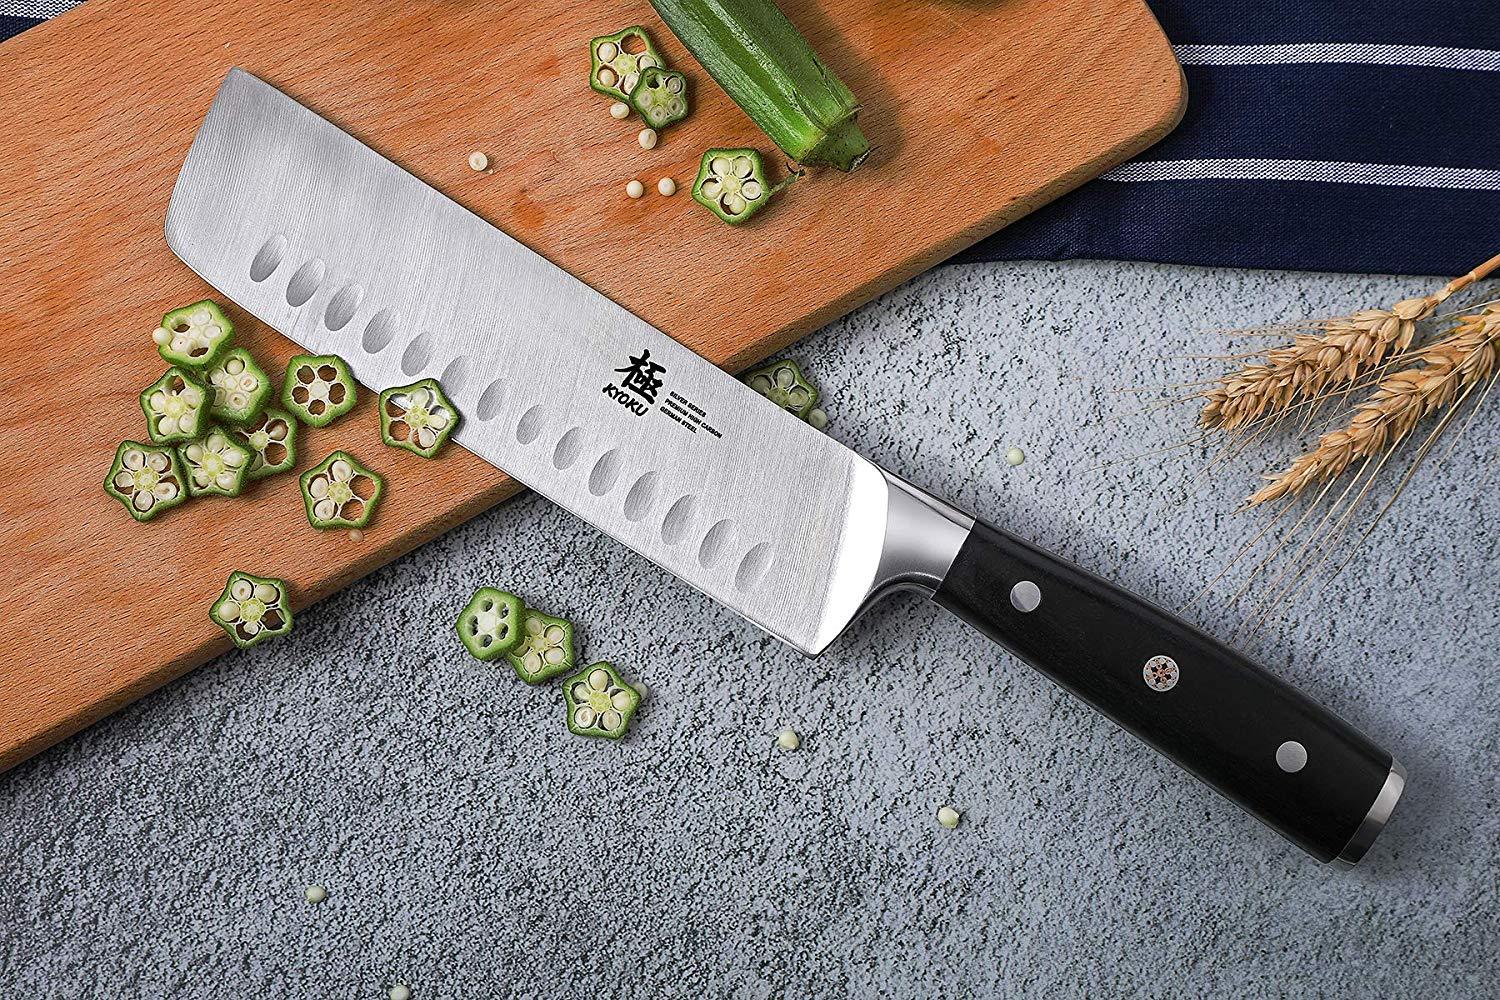 KYOCERA > The versatile nakiri gets the job done! The sharp wide blade  scoops up veggies fast!